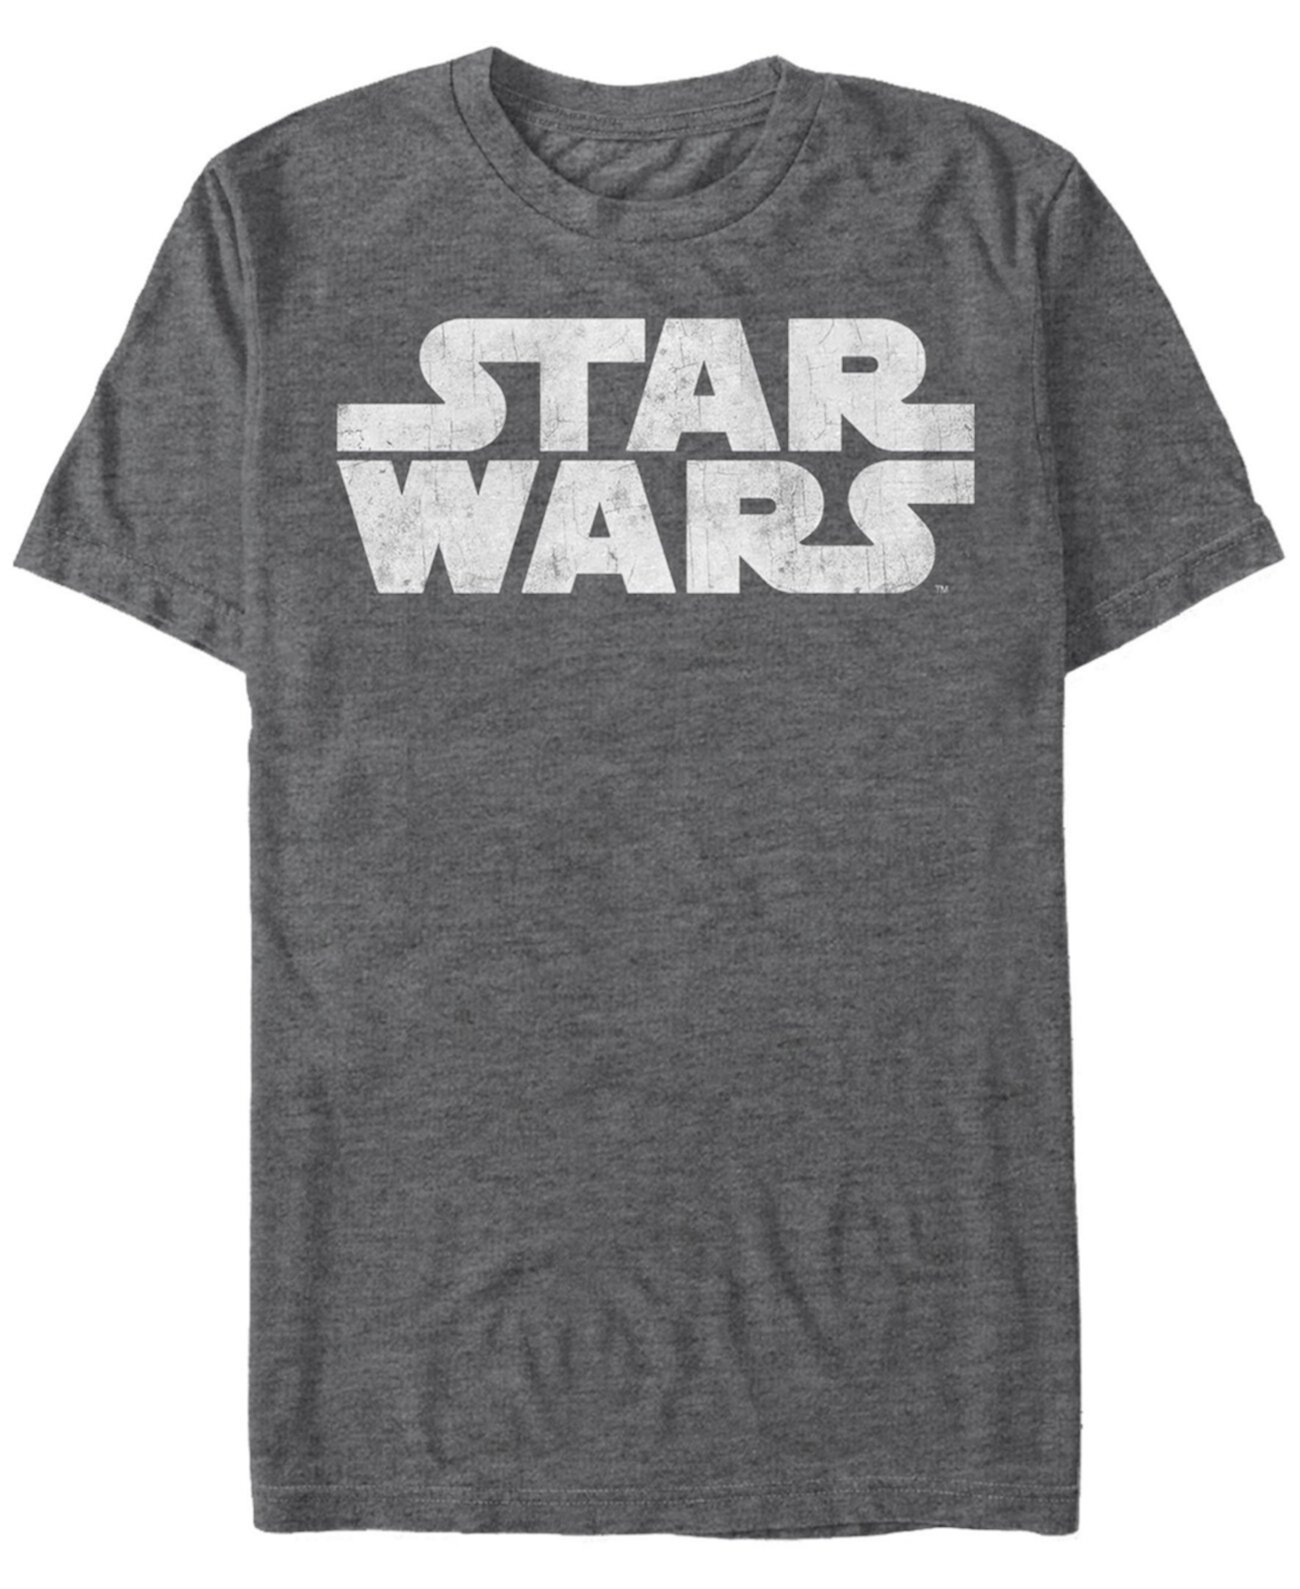 Мужская футболка с коротким рукавом в винтажном стиле с логотипом Star Wars FIFTH SUN